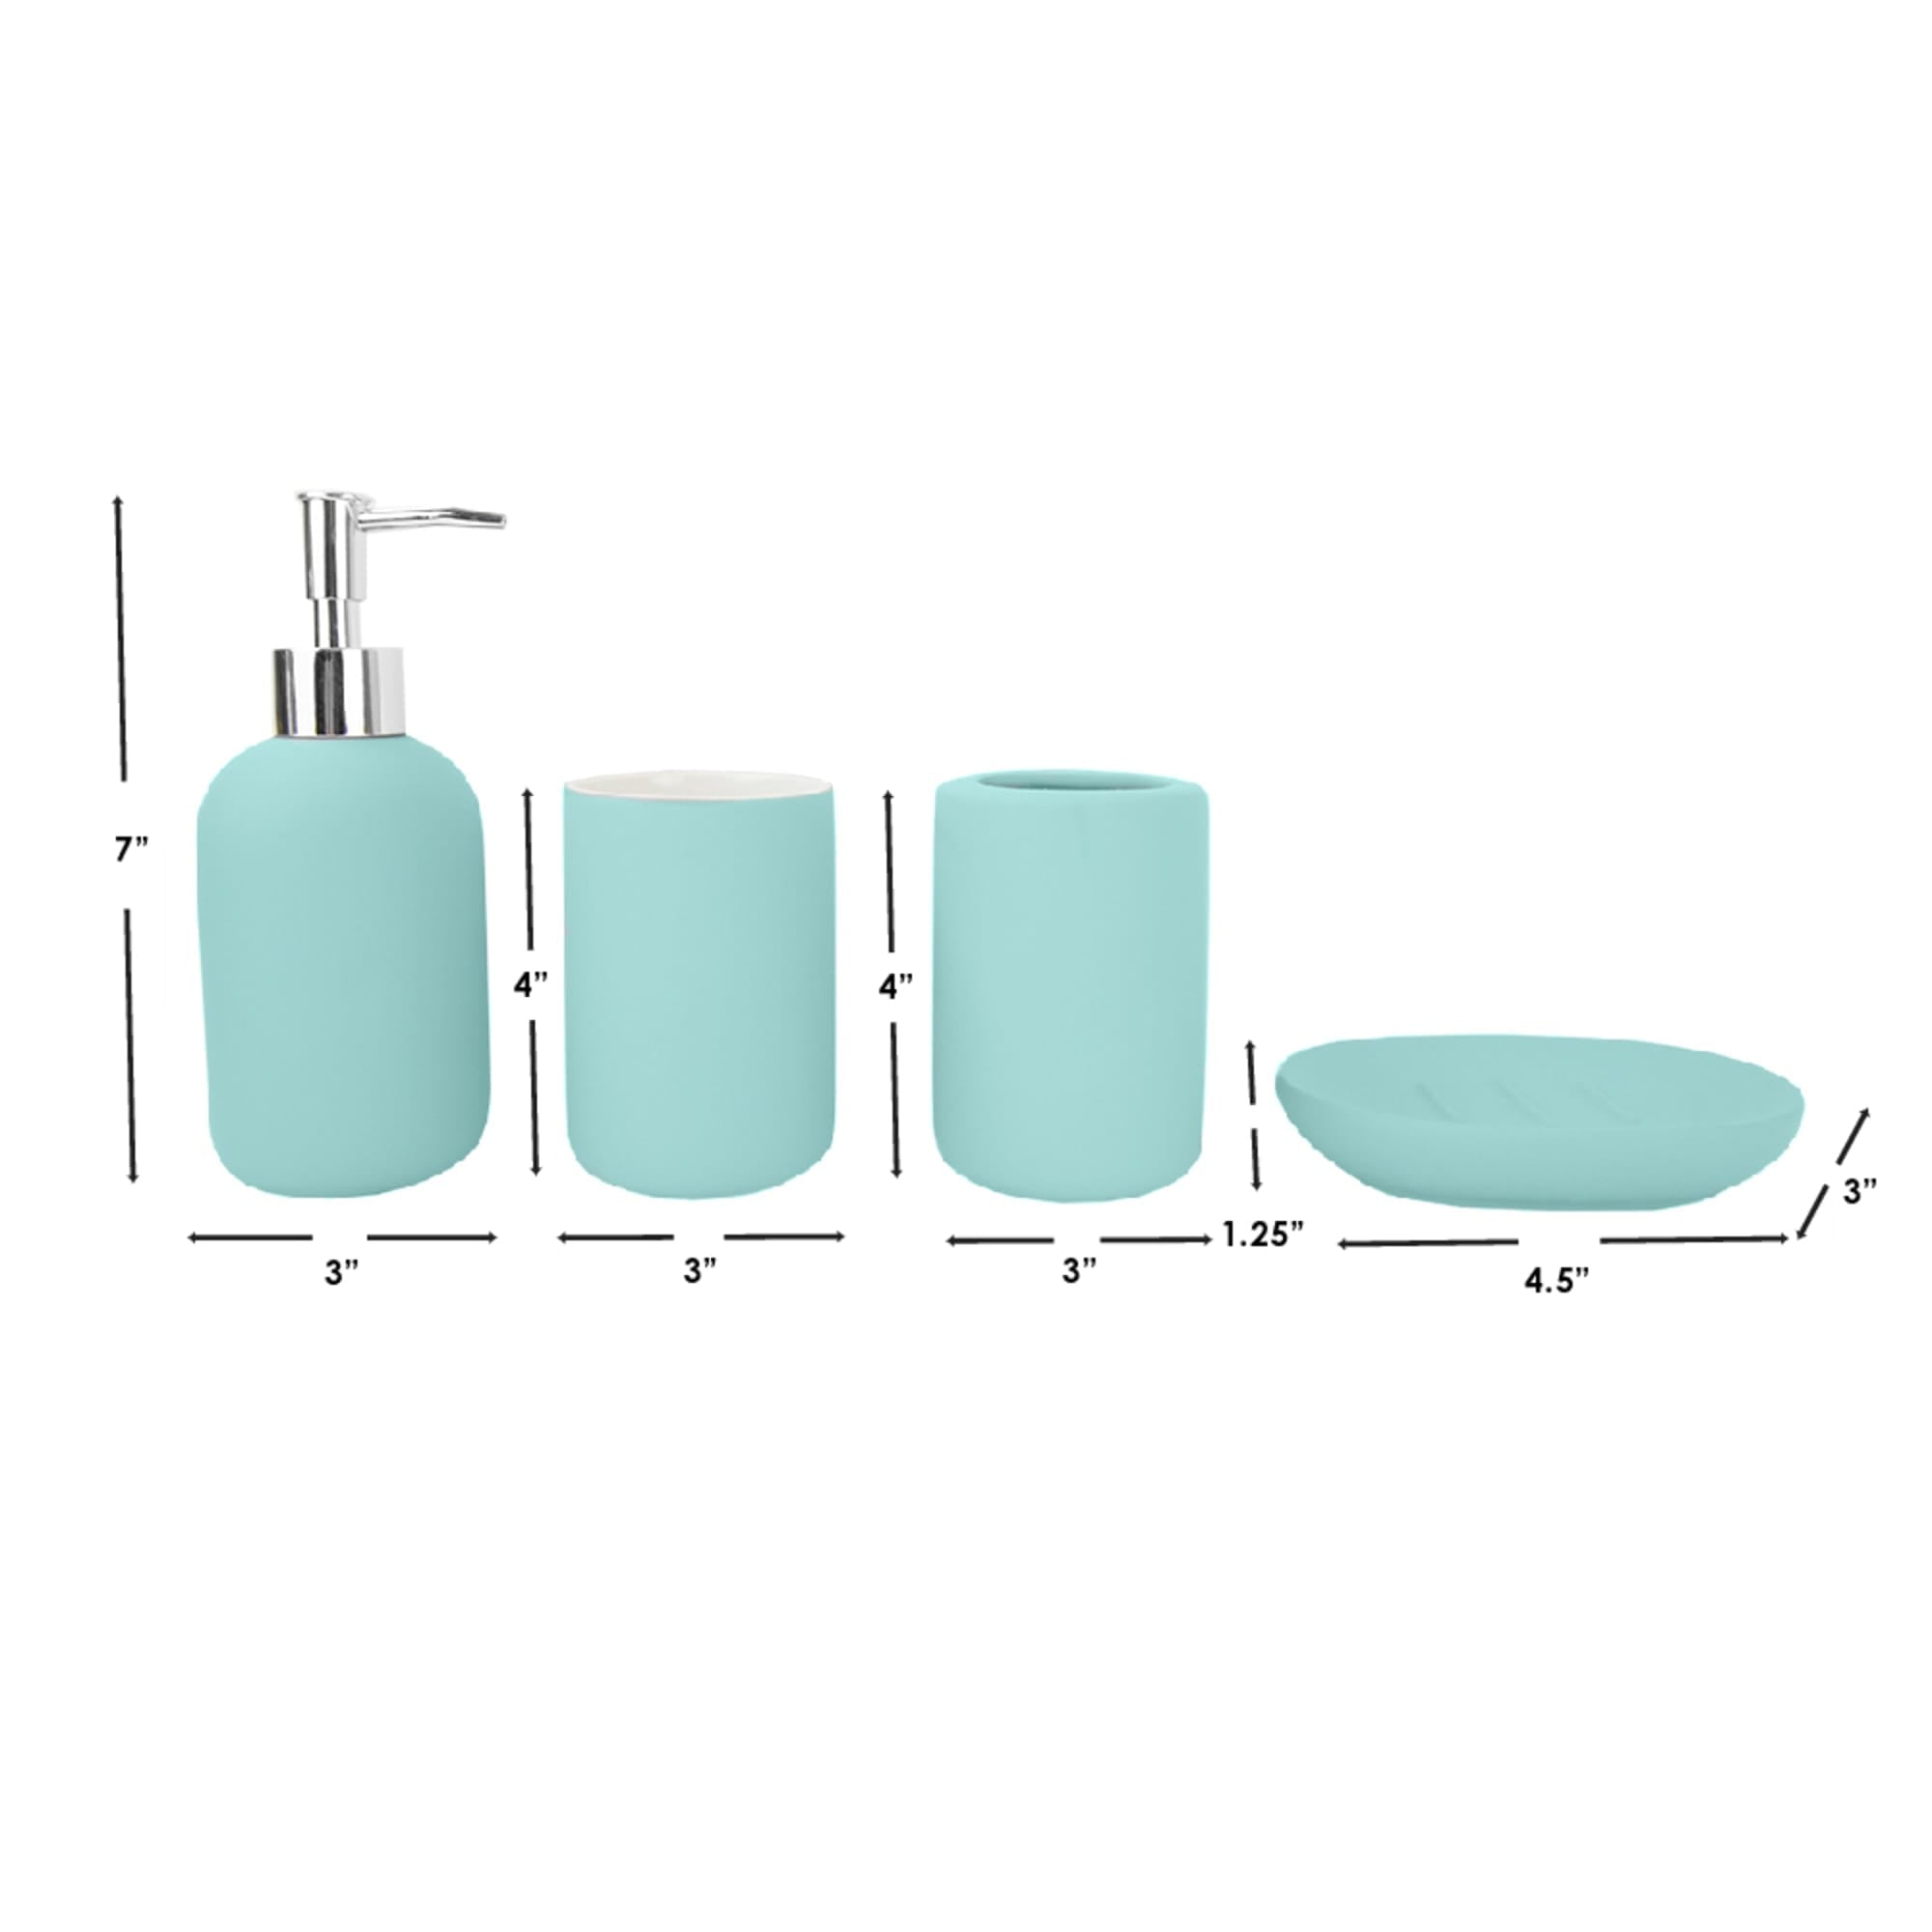 Home Basic 4 Piece Rubberized Ceramic Bath Accessory Set, Blue $10.00 EACH, CASE PACK OF 6